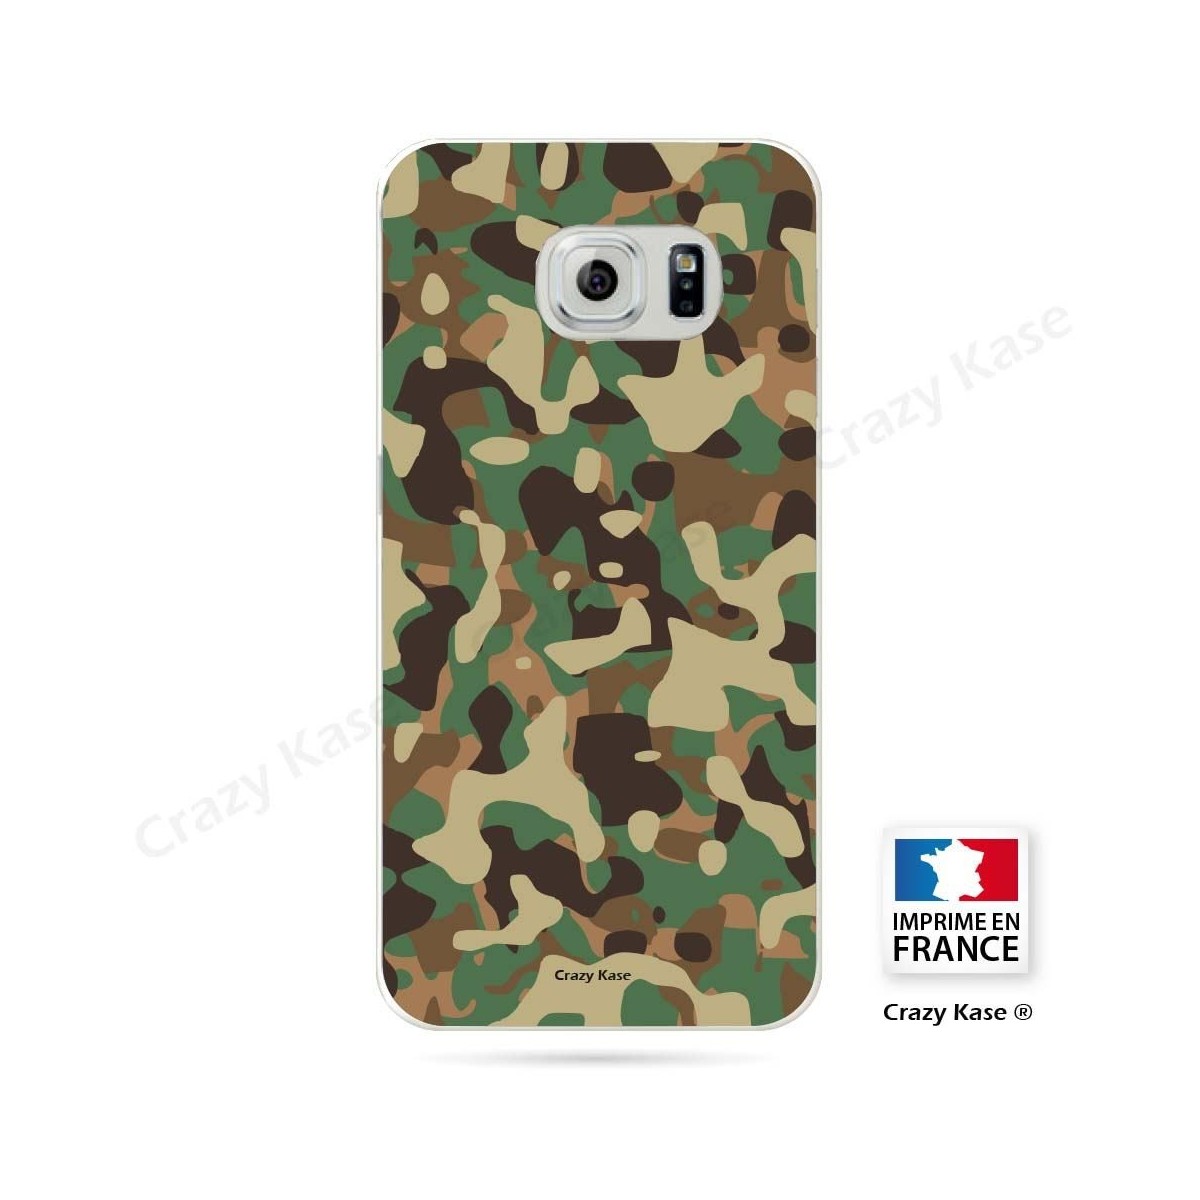 Coque Galaxy S6 Edge souple motif Camouflage militaire - Crazy Kase